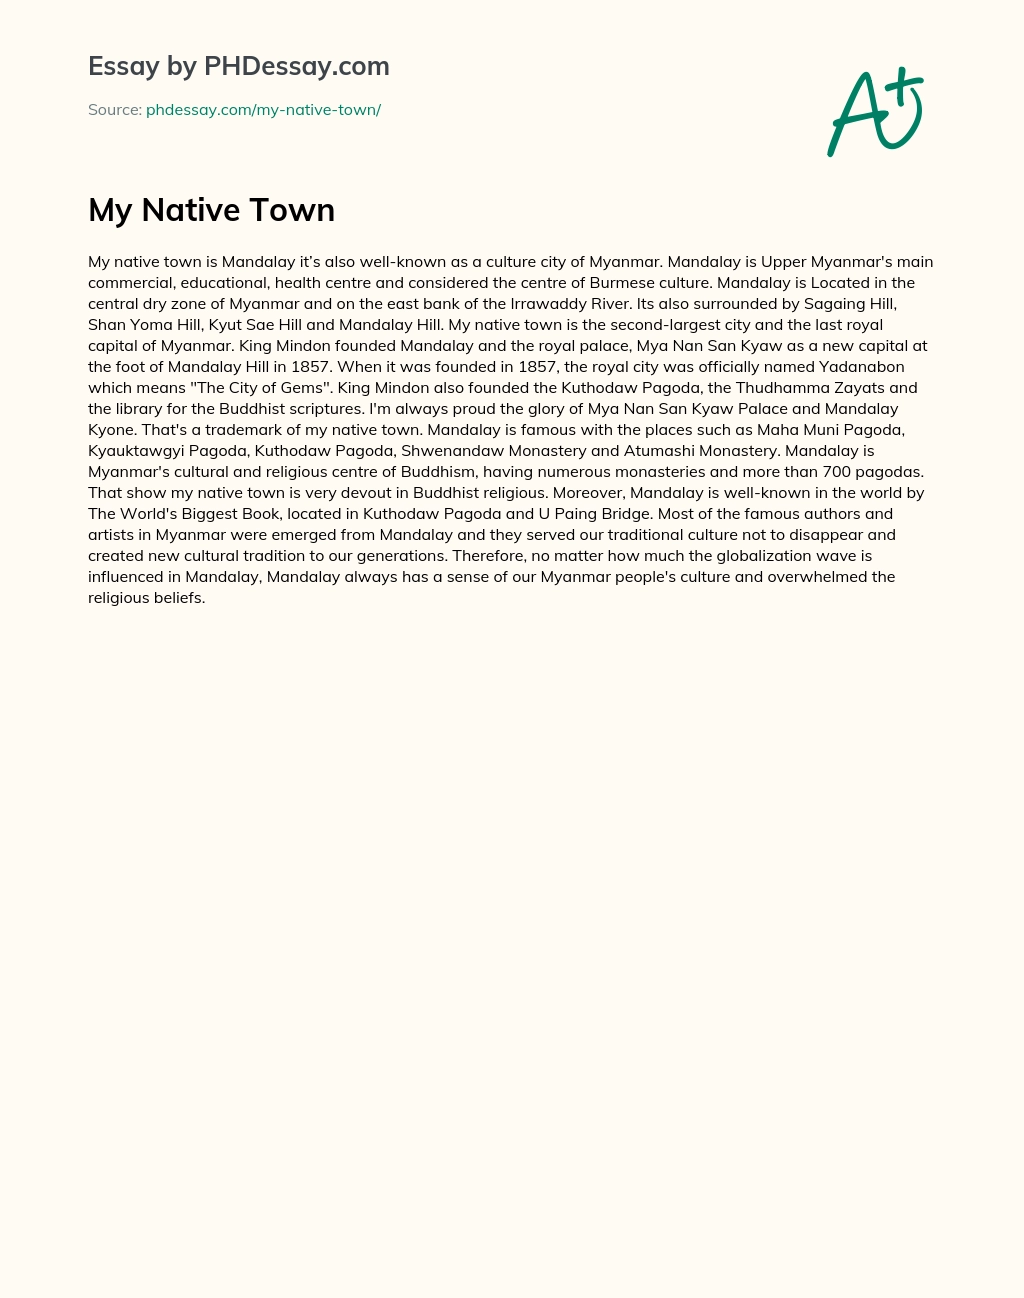 my native town yangon essay